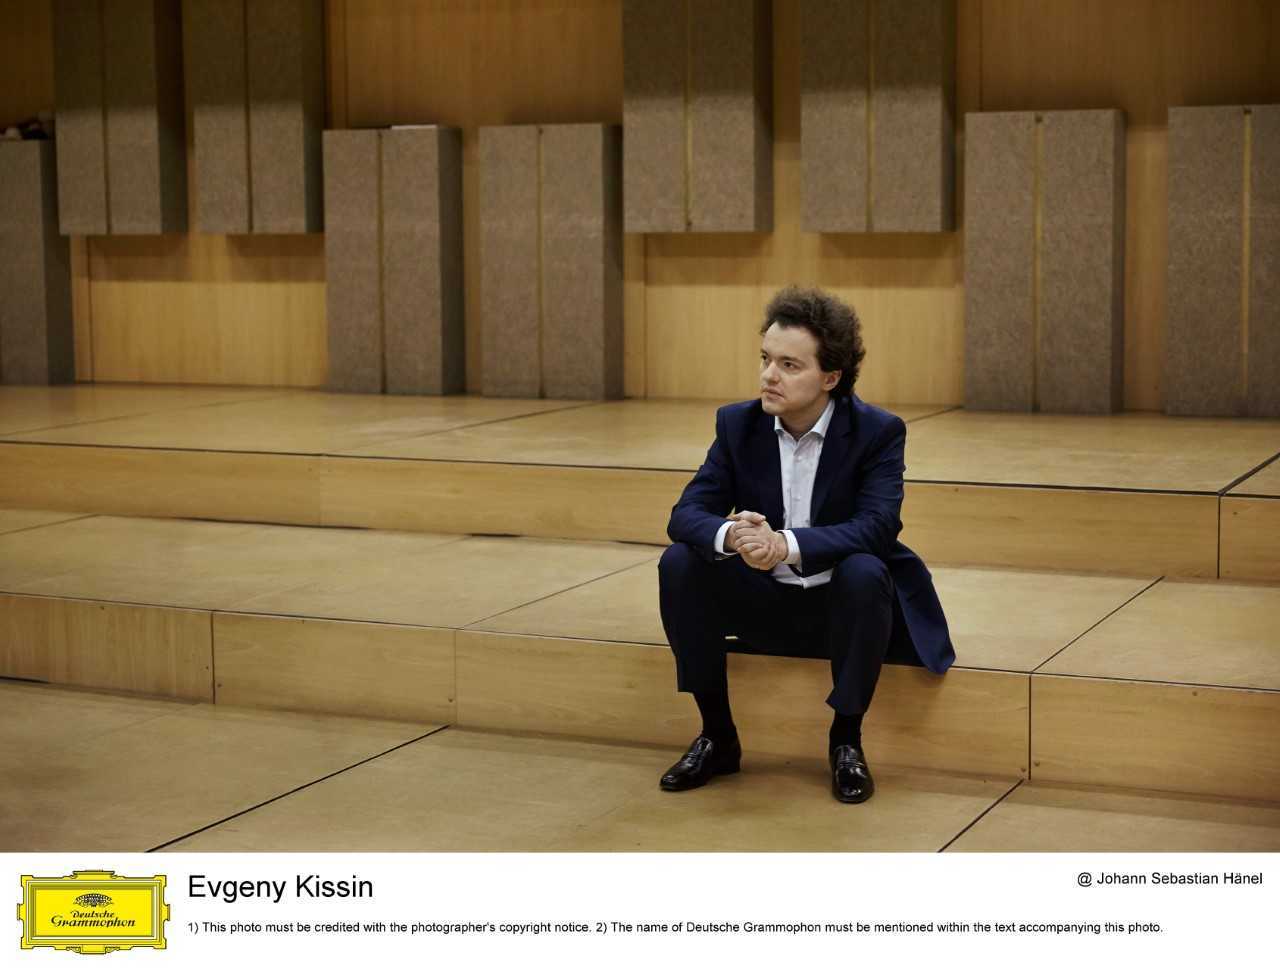 Pianist Evgeny Kissin (Johann Sebastian Hanel/Deutsche Grammophon)